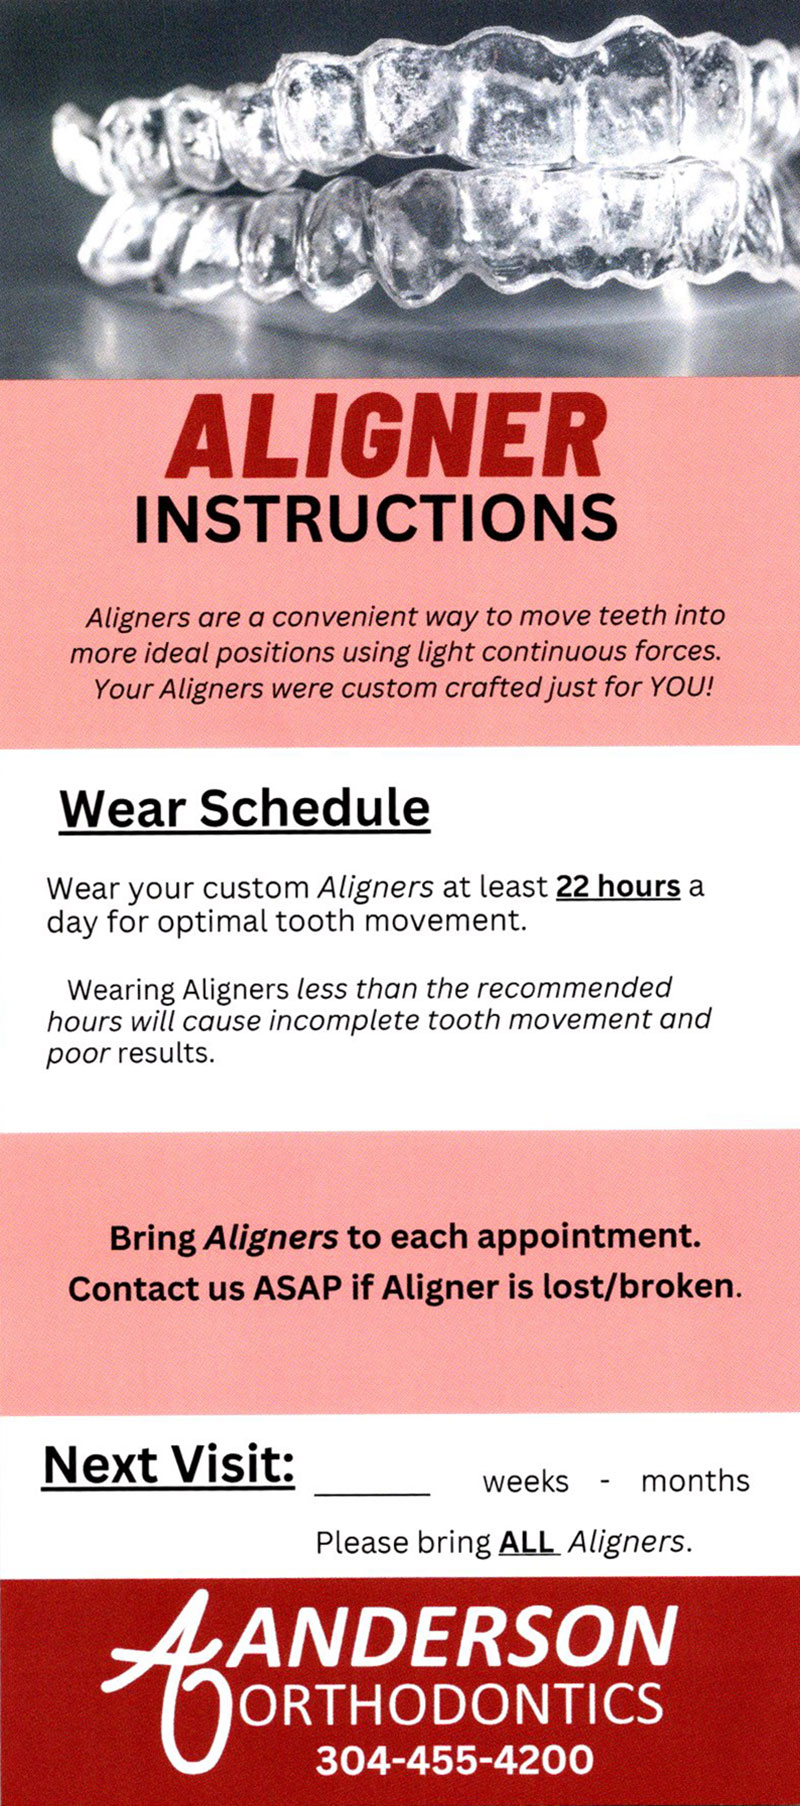 Aligner Instructions photo1